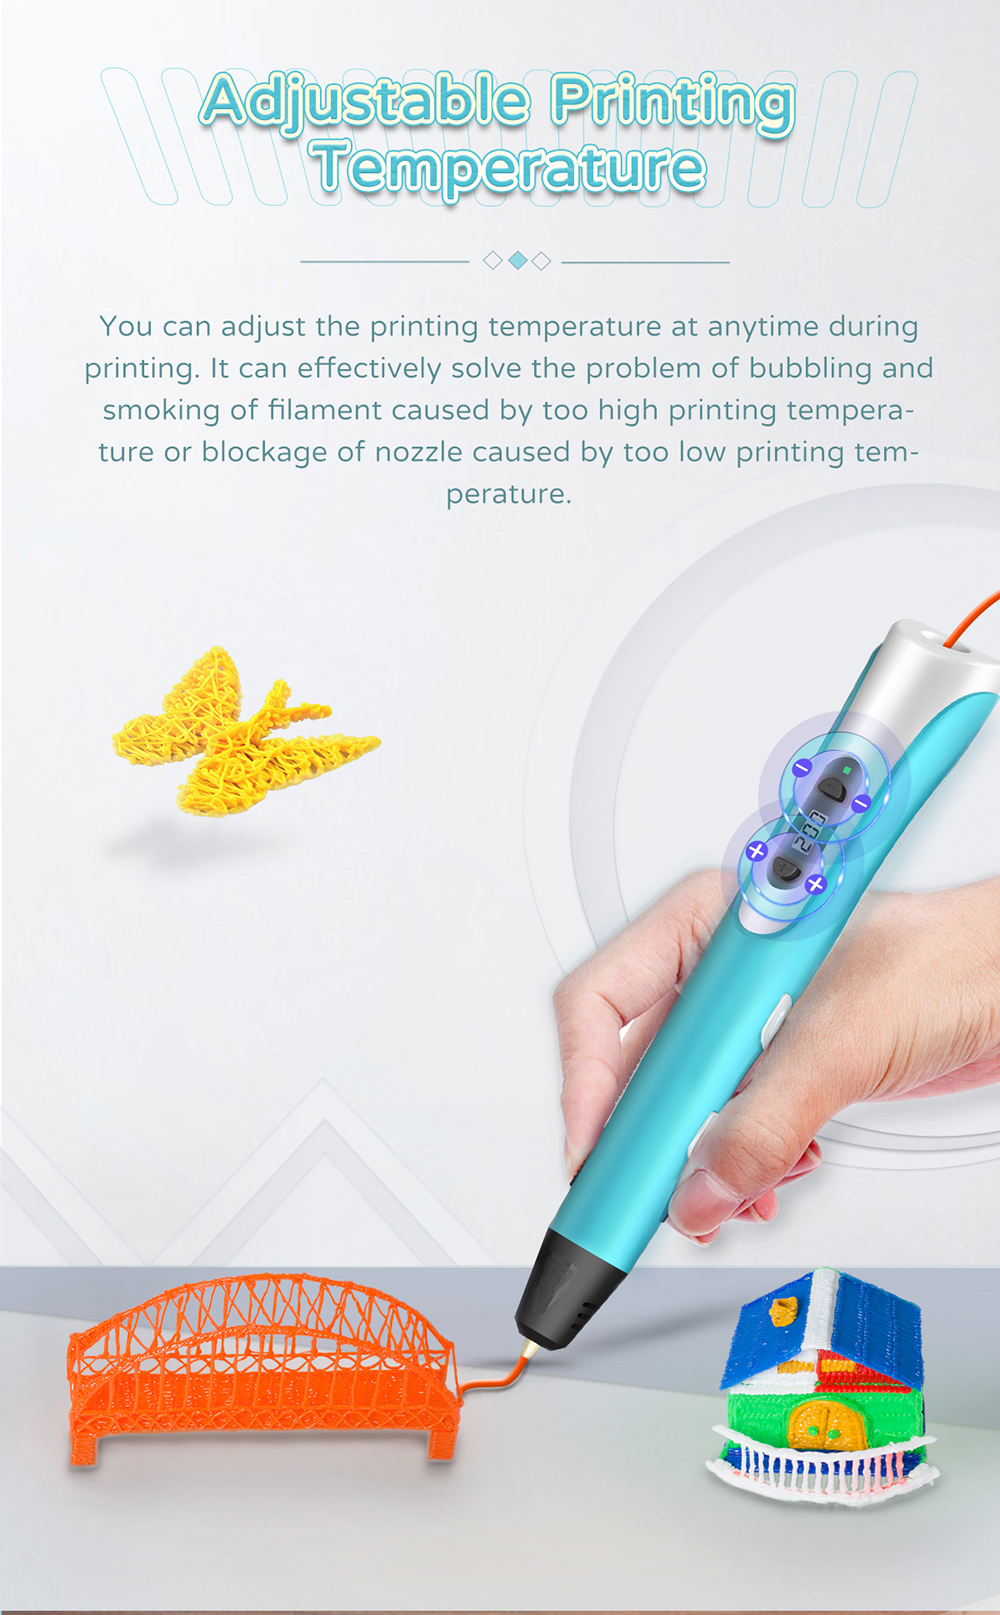 geeetech TG-18 3D Printing Pen description  of  adjustable temperature